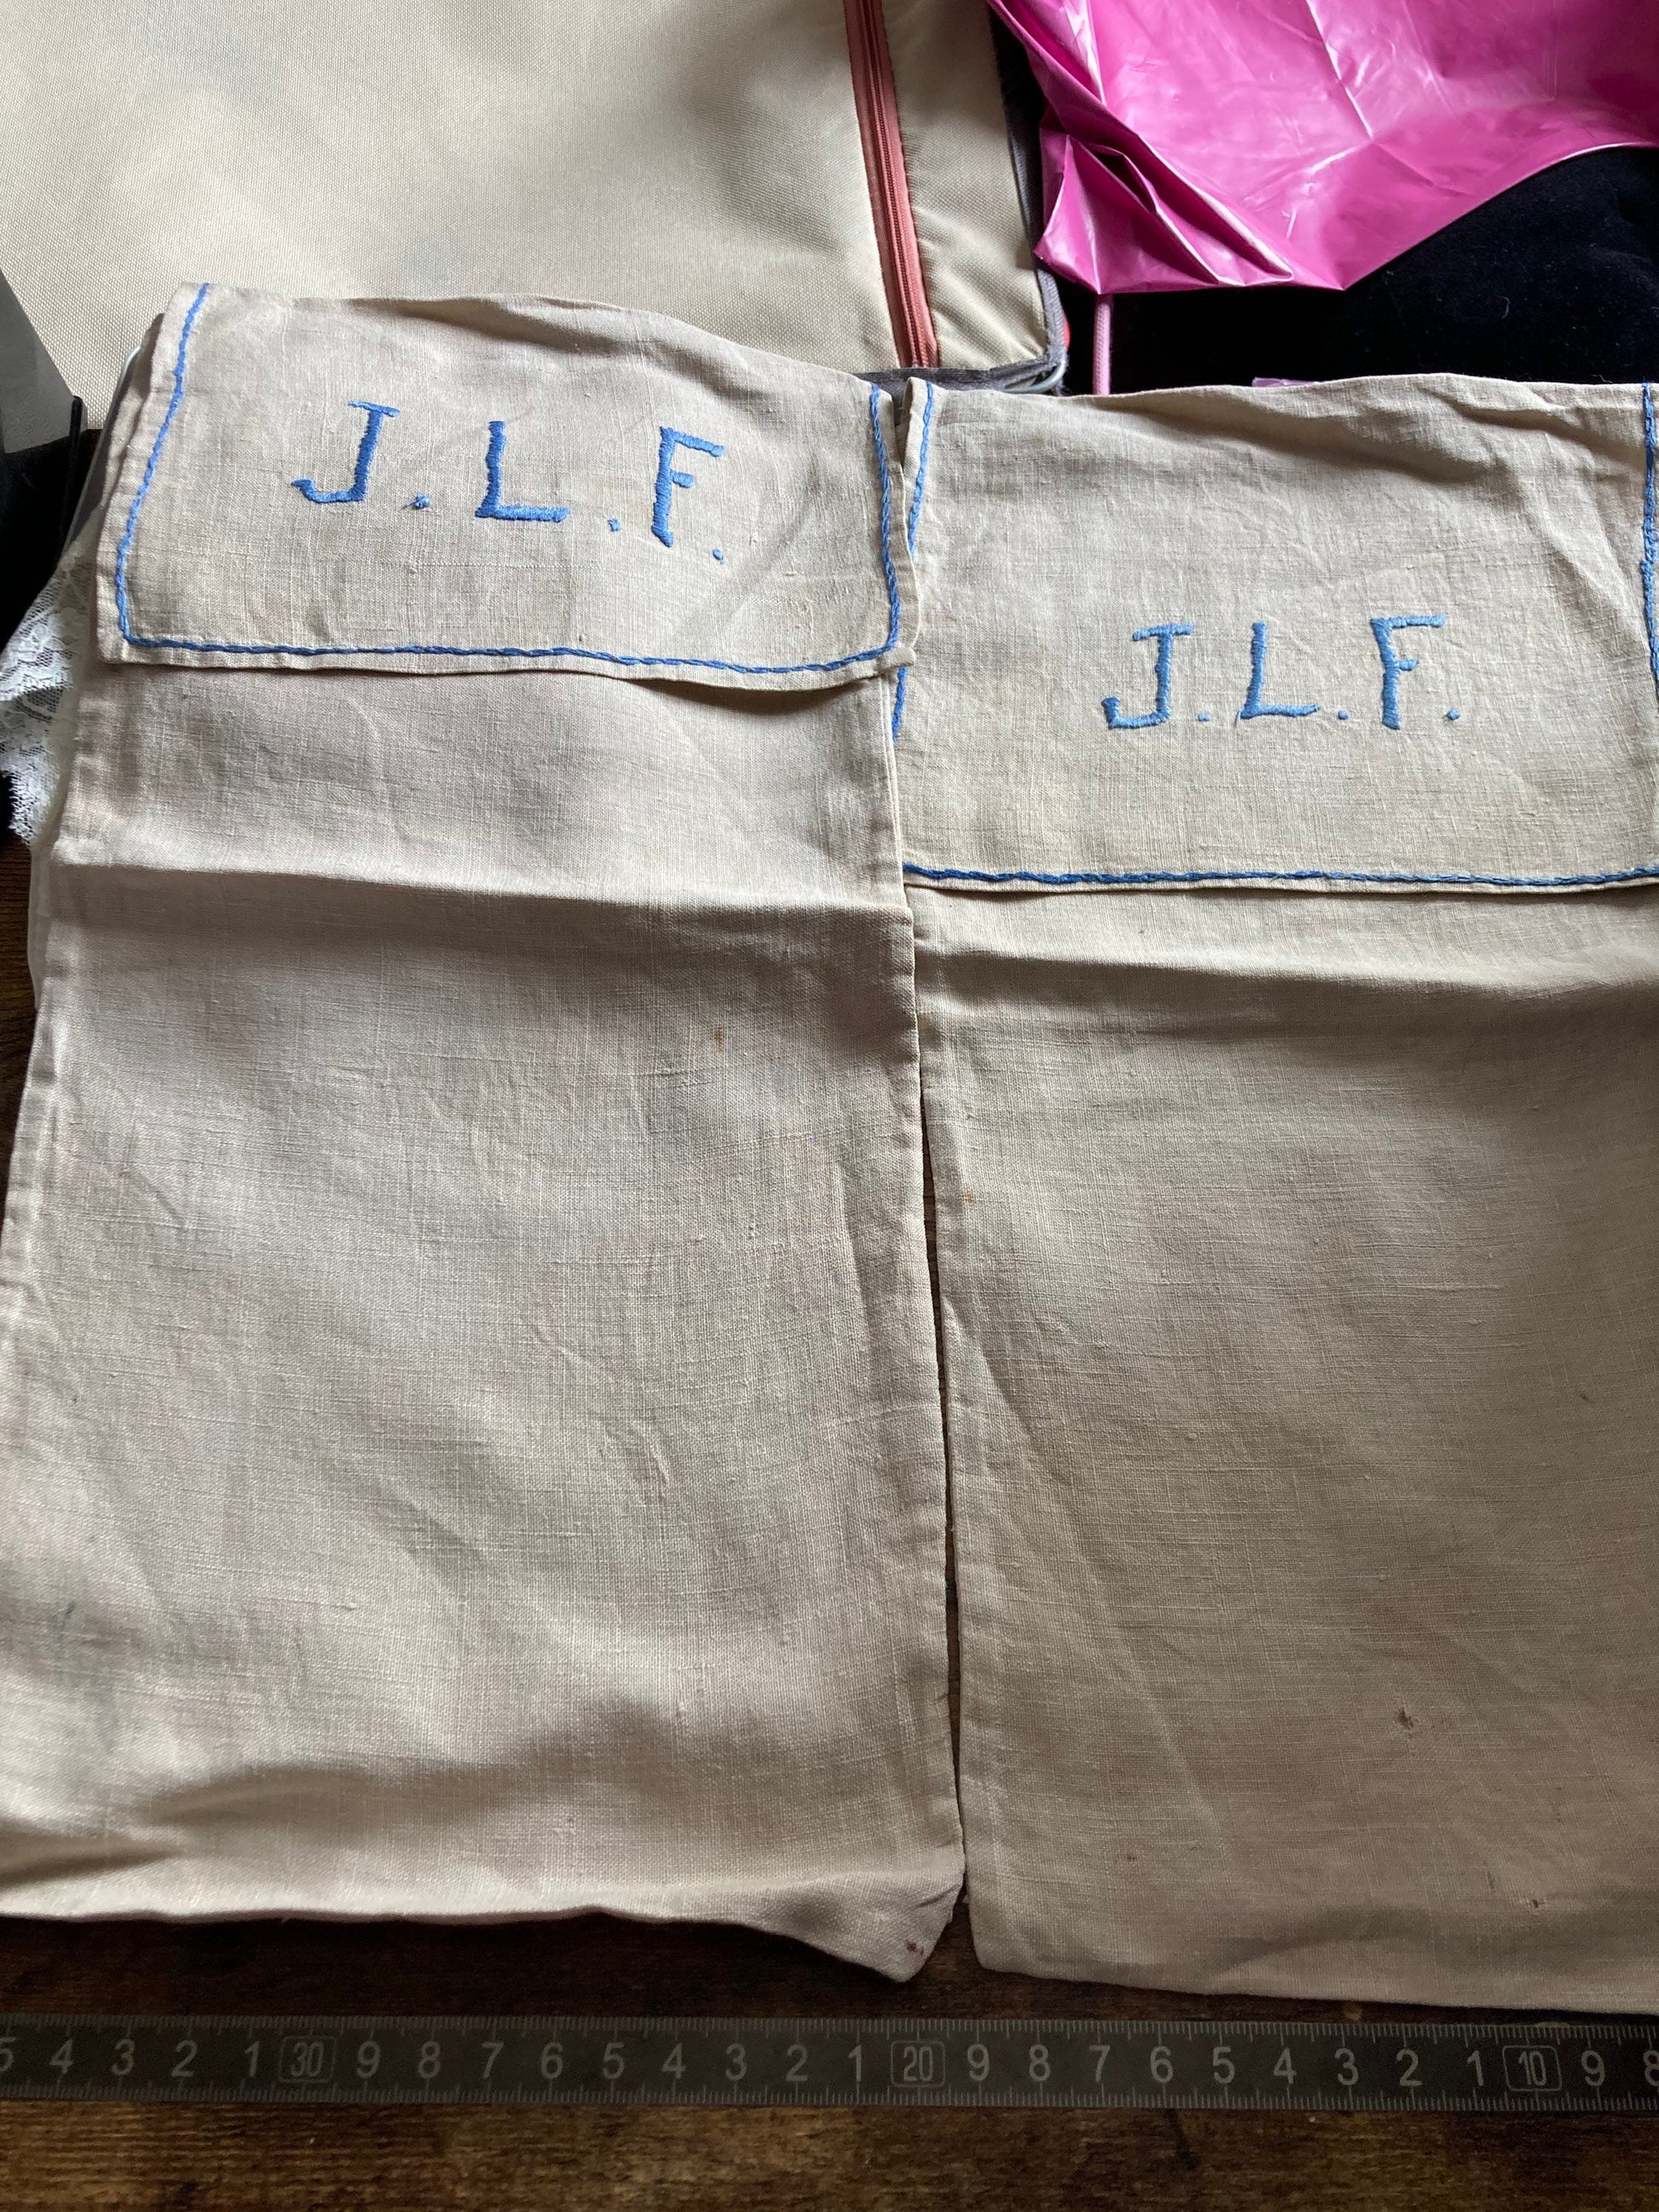 2 x Monogrammed J L F shoe bag Antique embroidered folding travel storage case for shoes